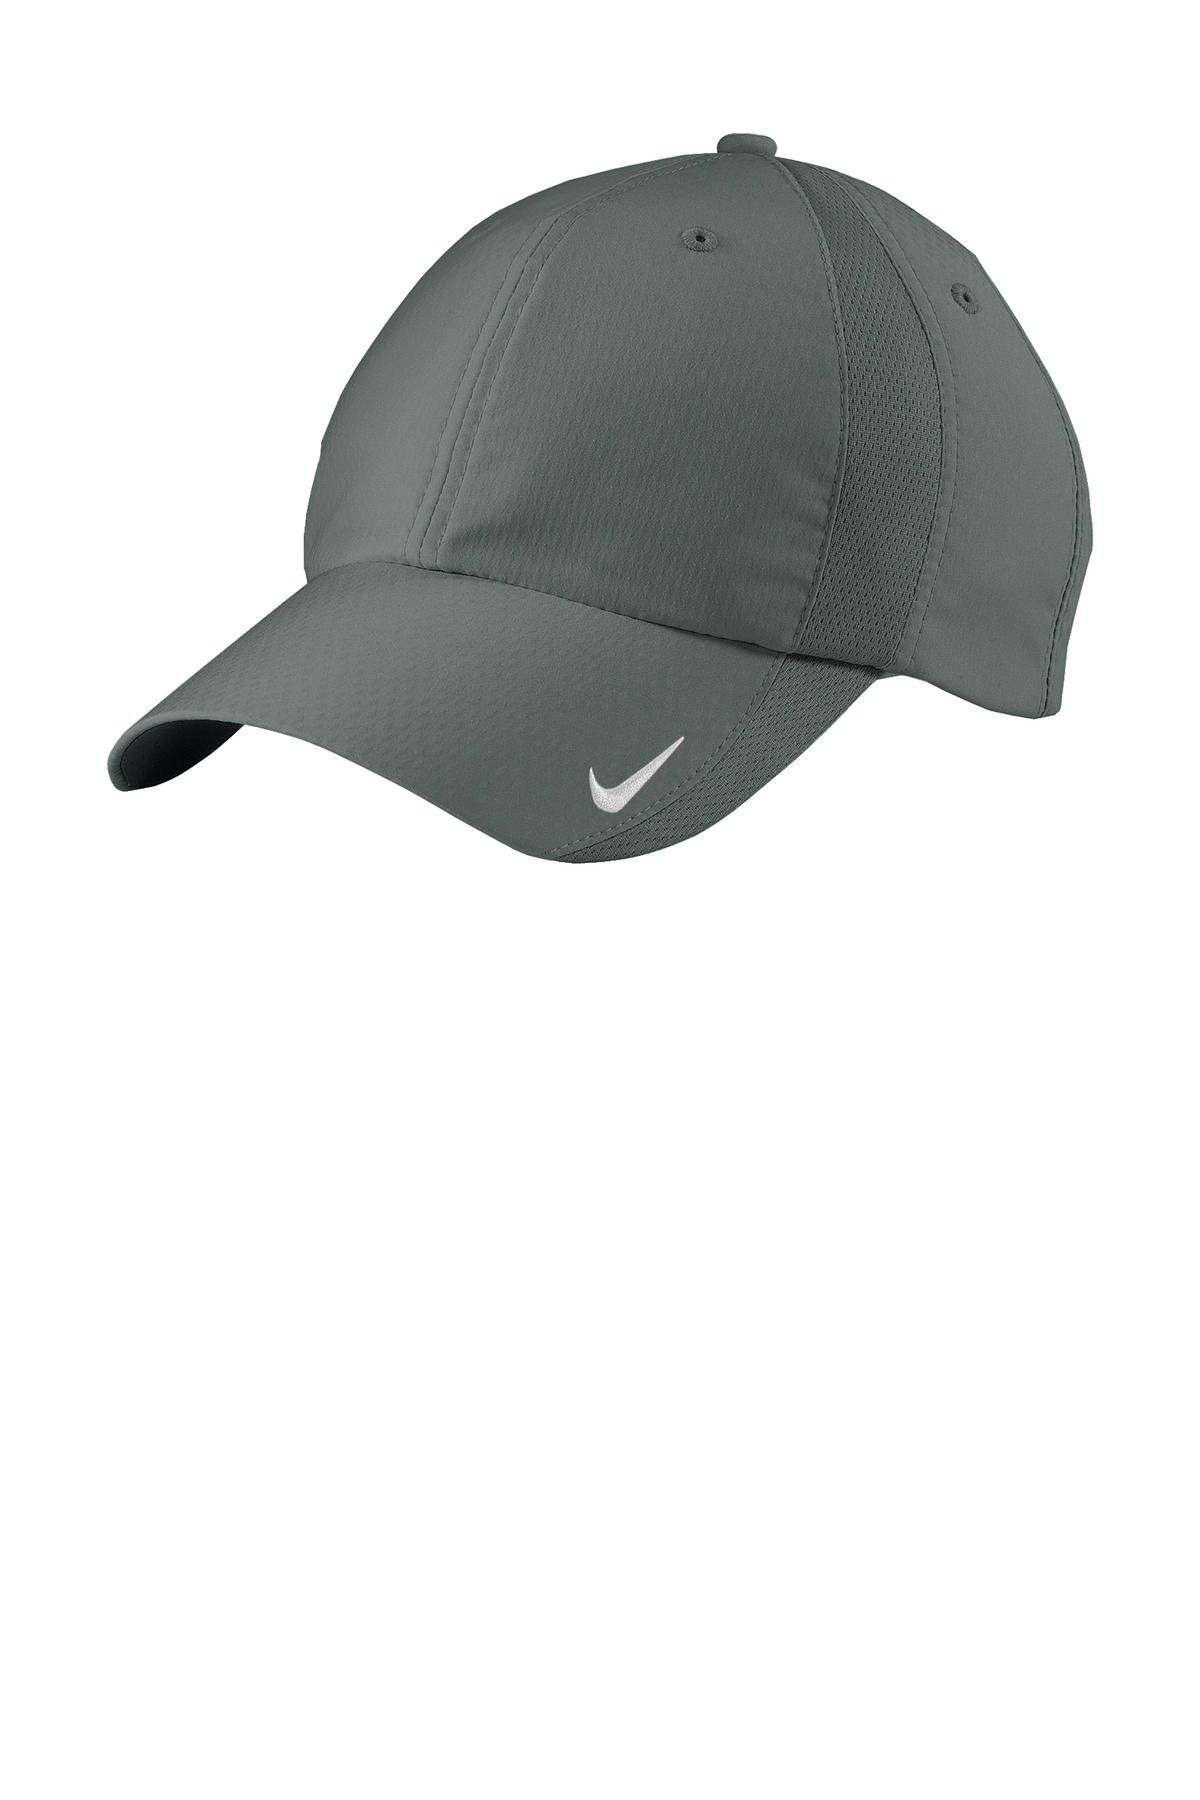 Nike Sphere Performance Cap-